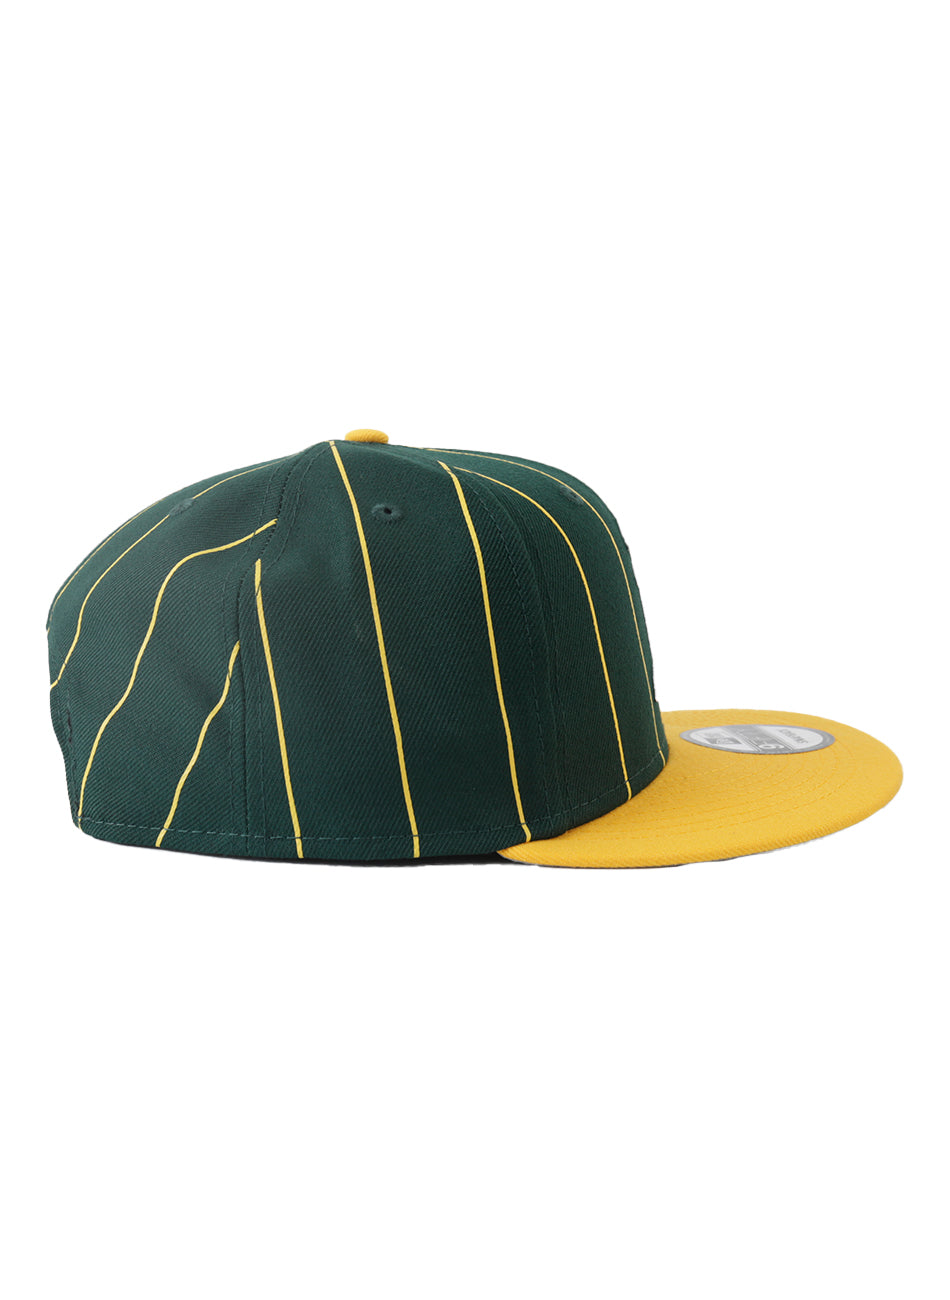 Oakland Athletics Vintage Pinstripe OTC 950 Snap-Back Hat